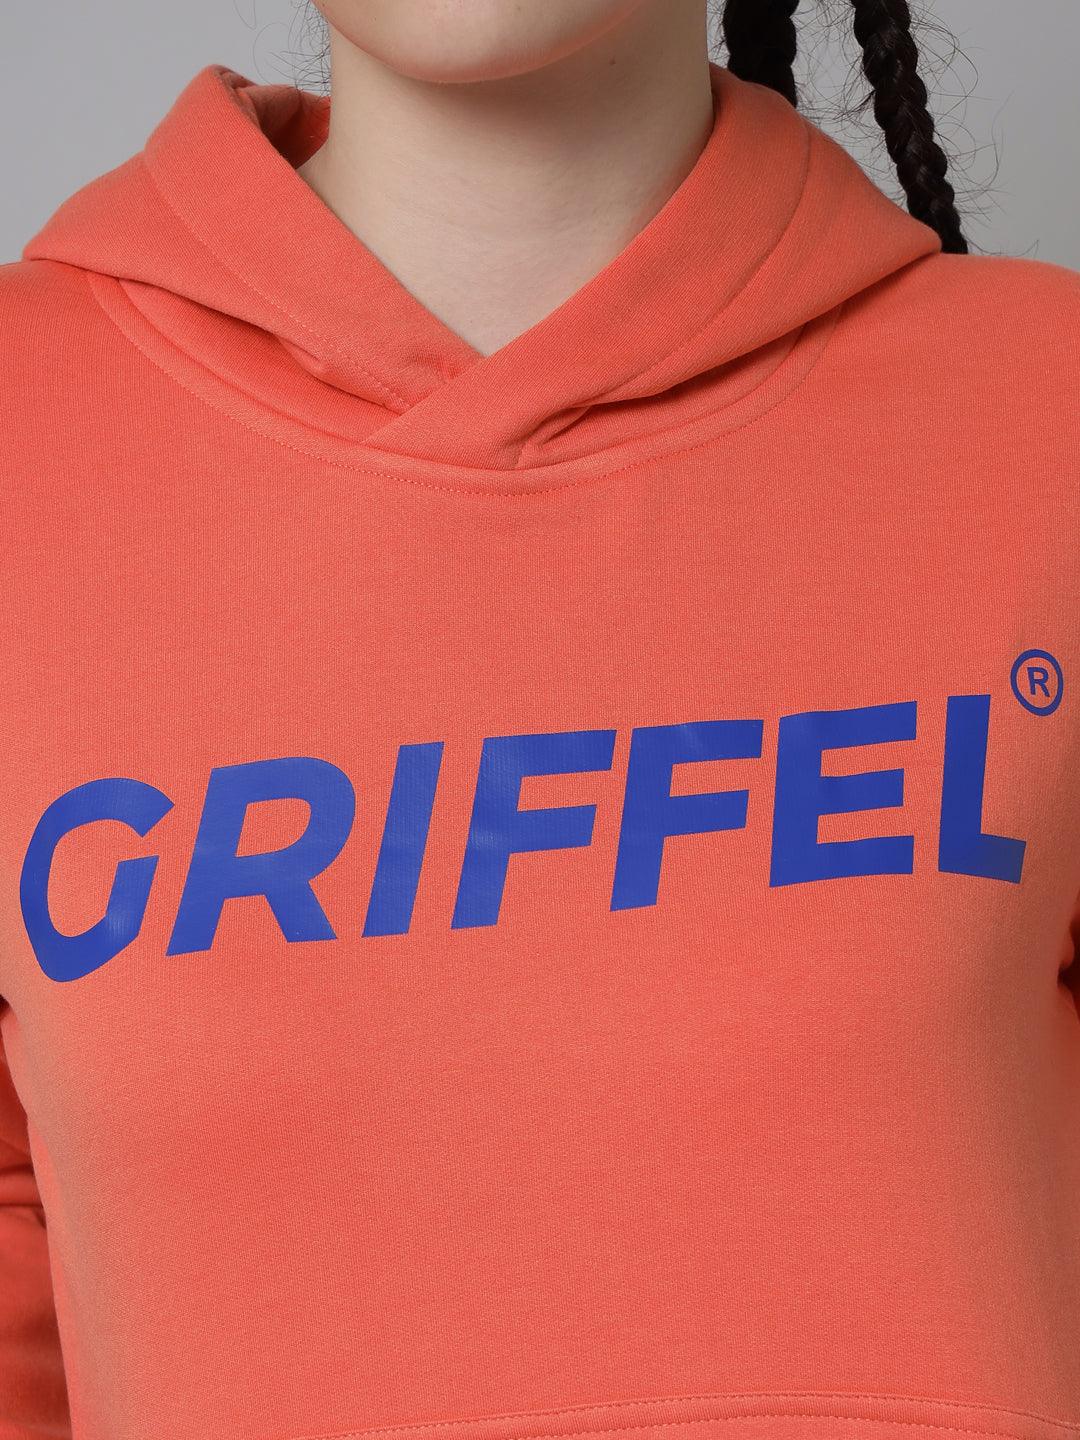 Griffel Women’s Cotton Fleece Full Sleeve Hoodie Peach Printed Sweatshirt - griffel